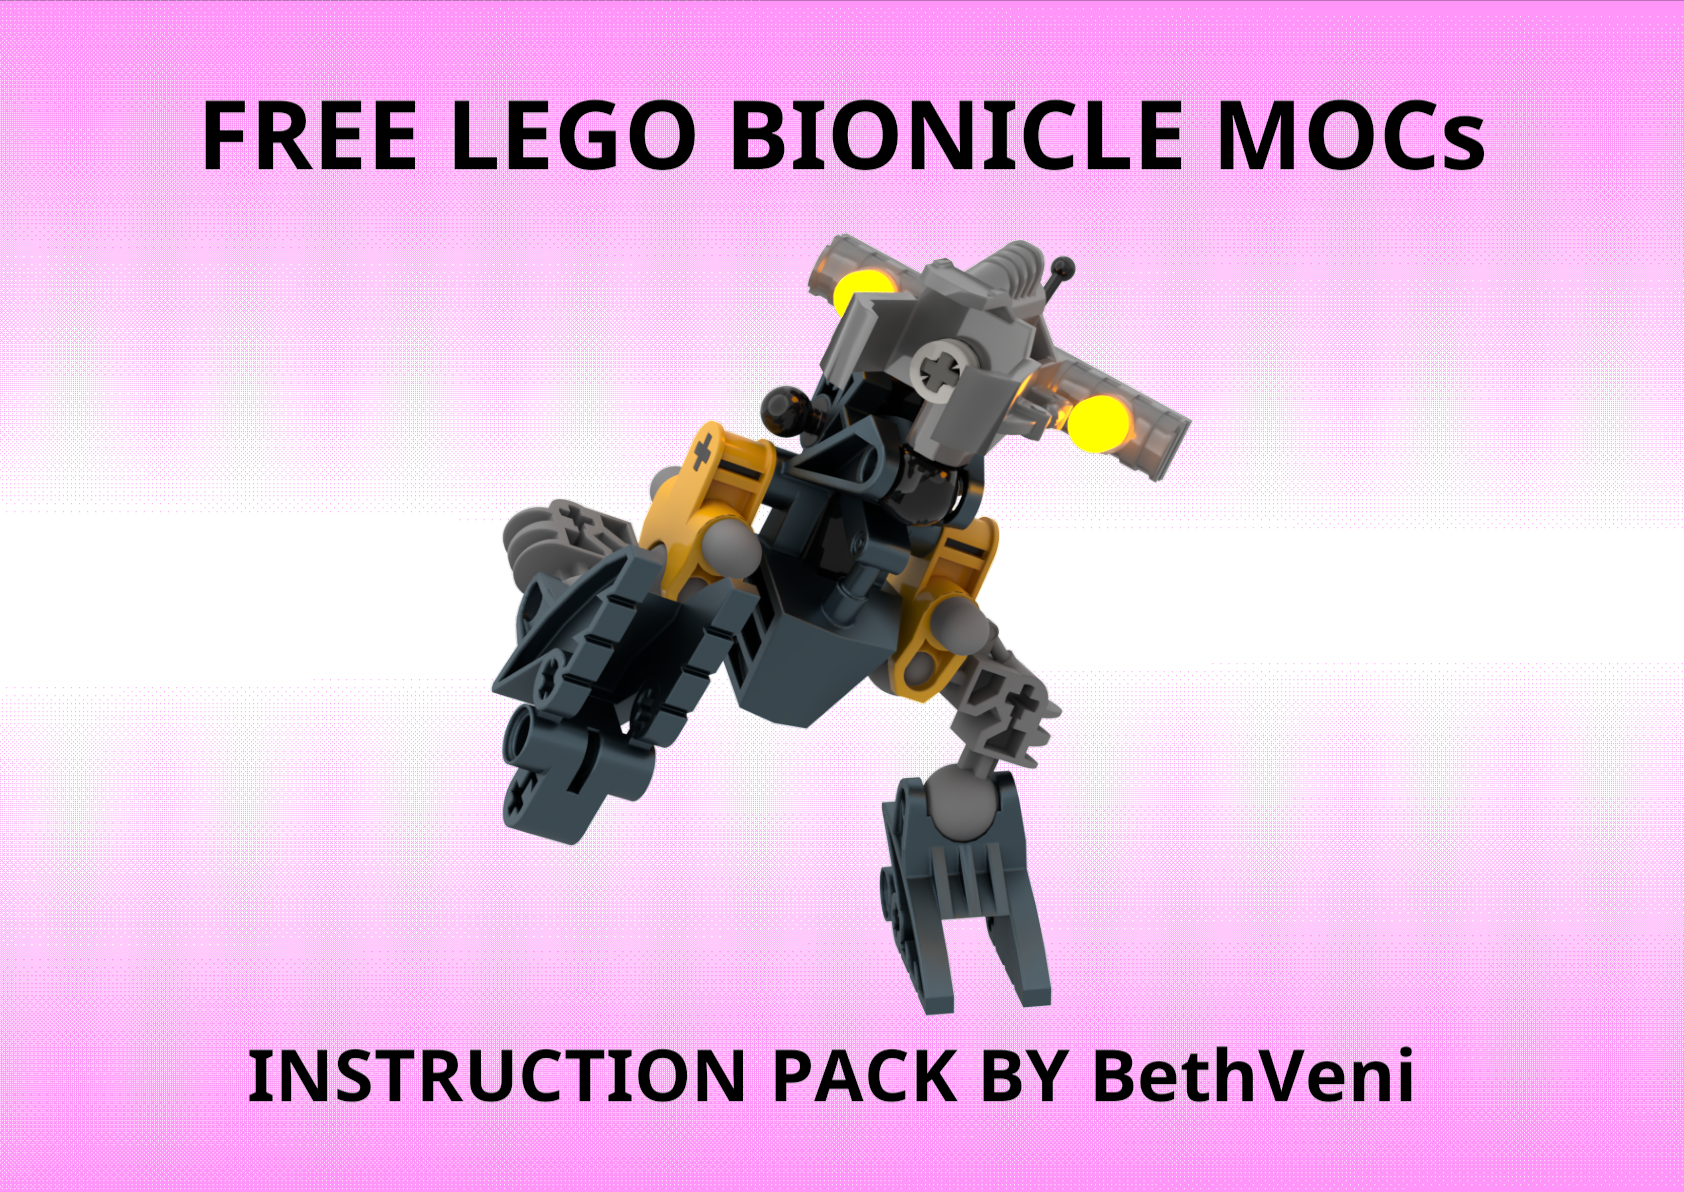 BV's FREE LEGO MOCs